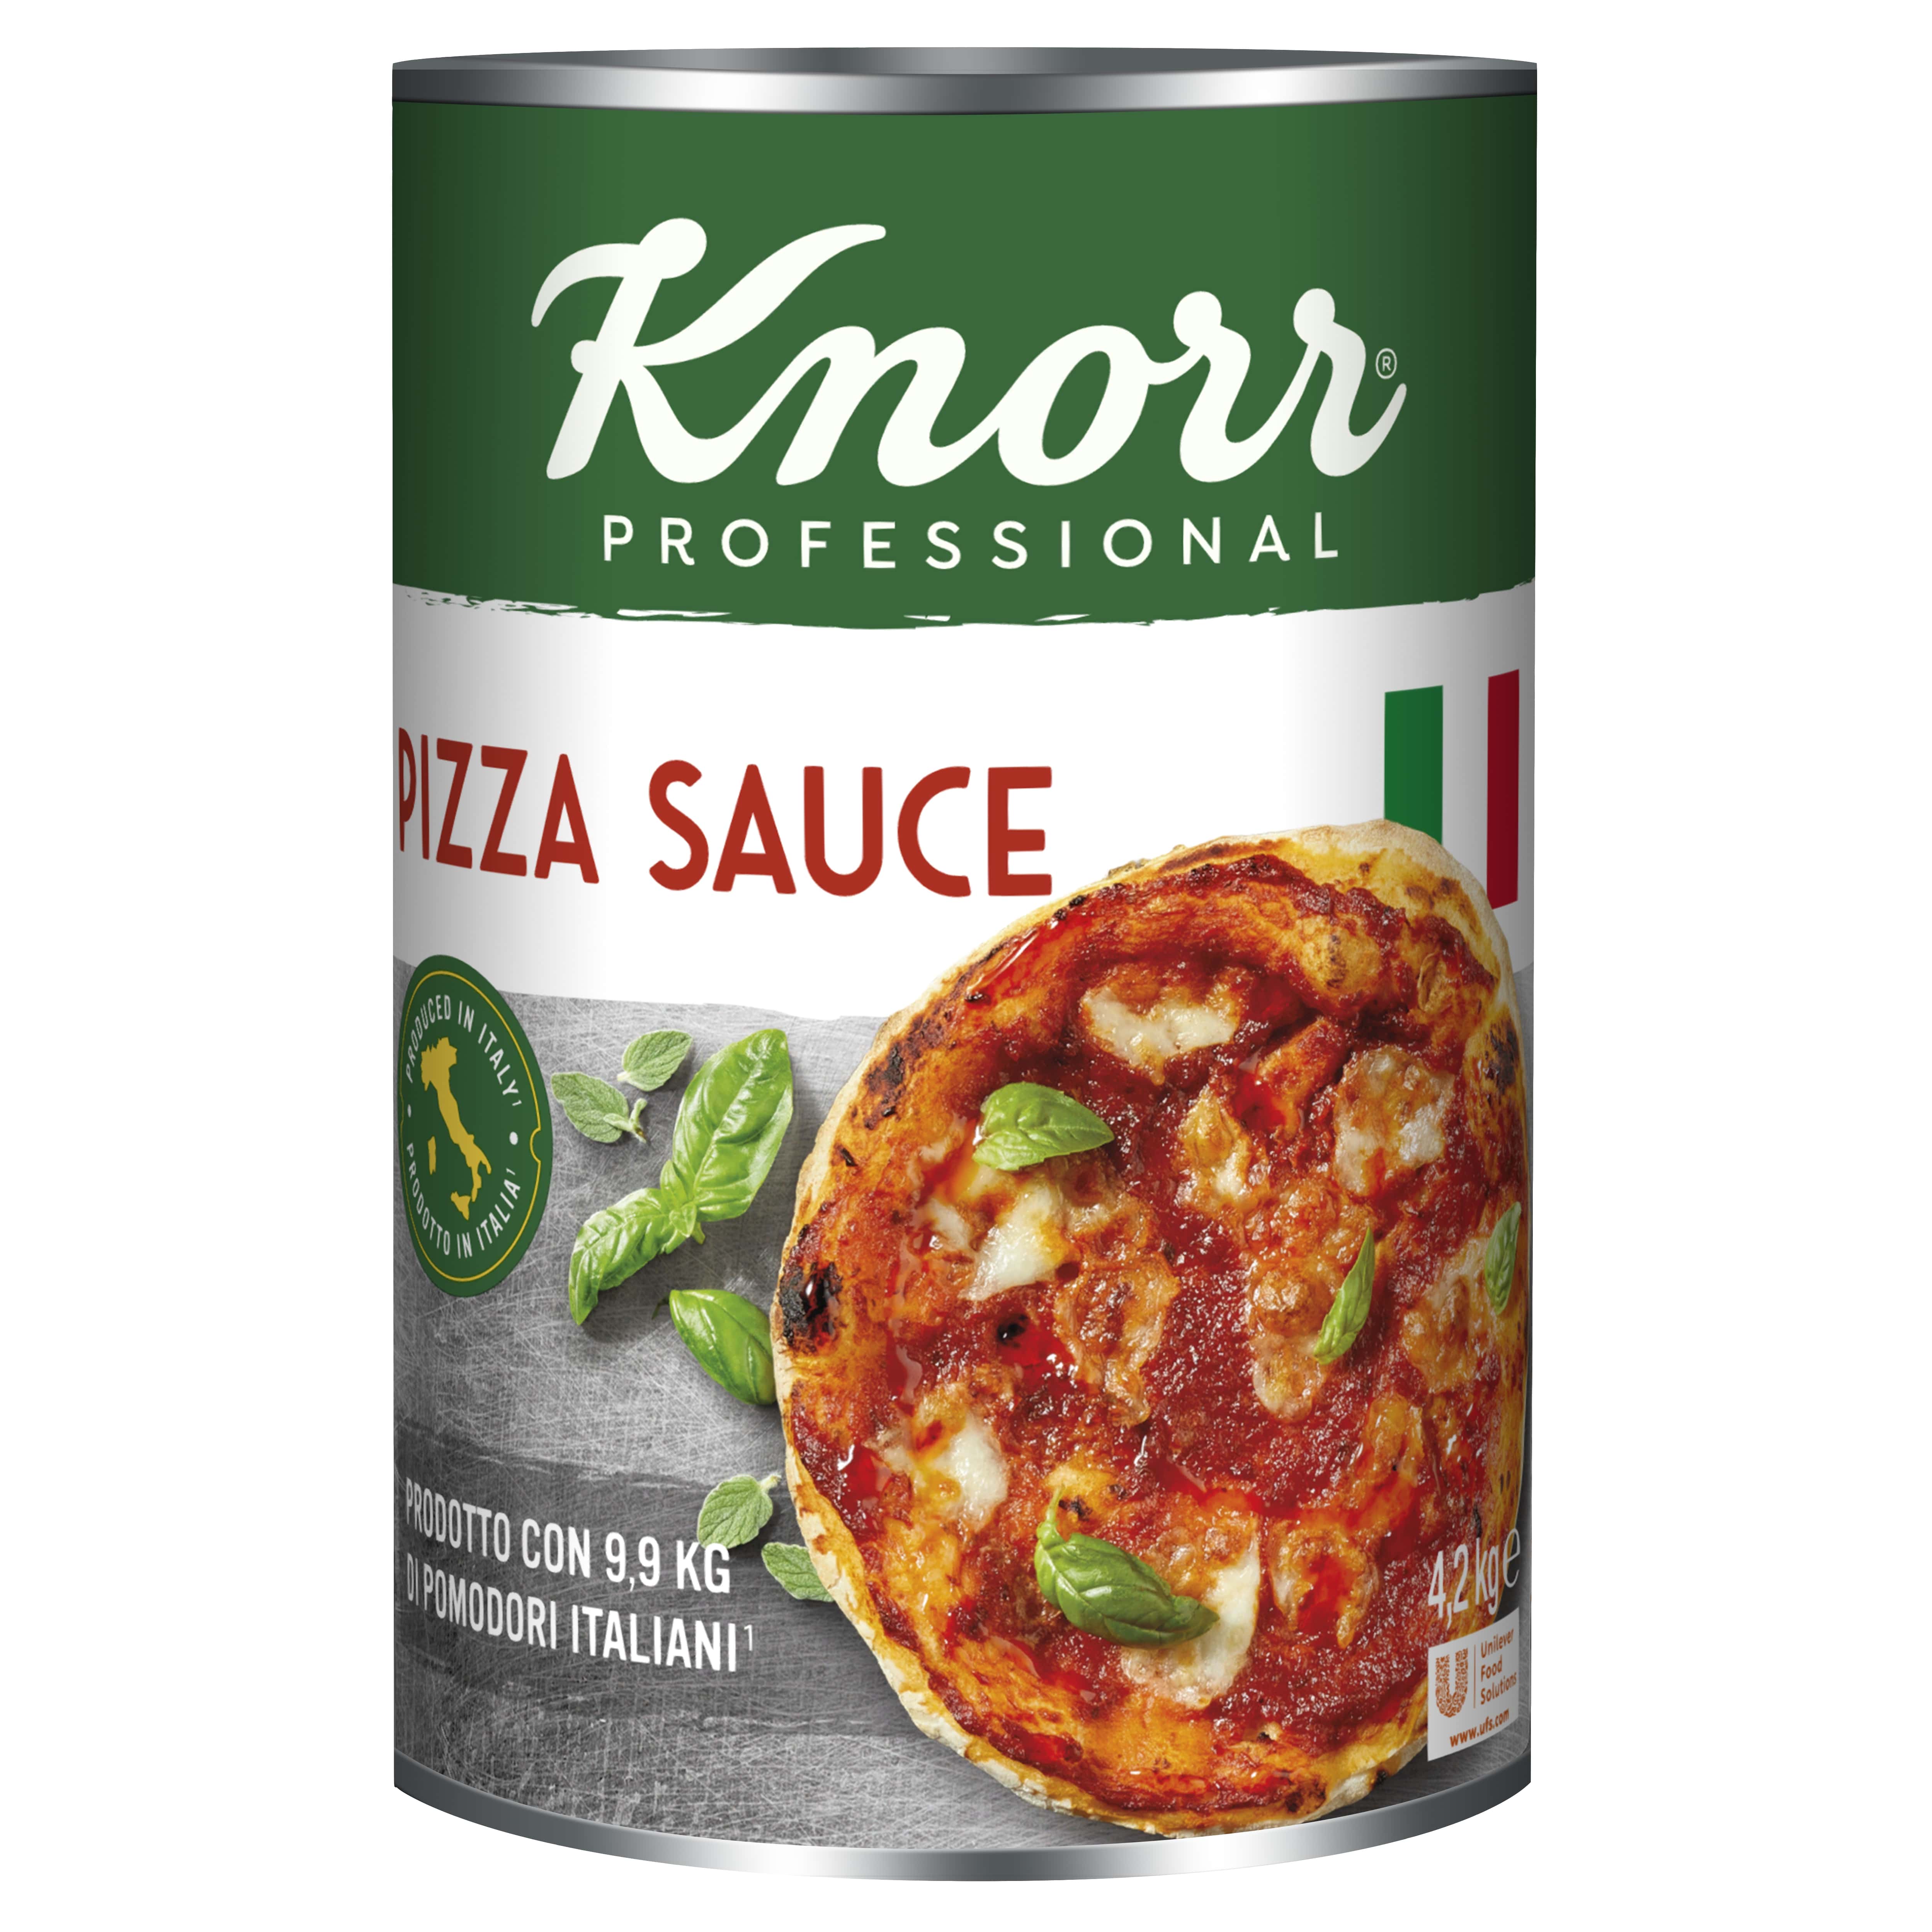 Knorr Pizzakastike 4,2 kg - 